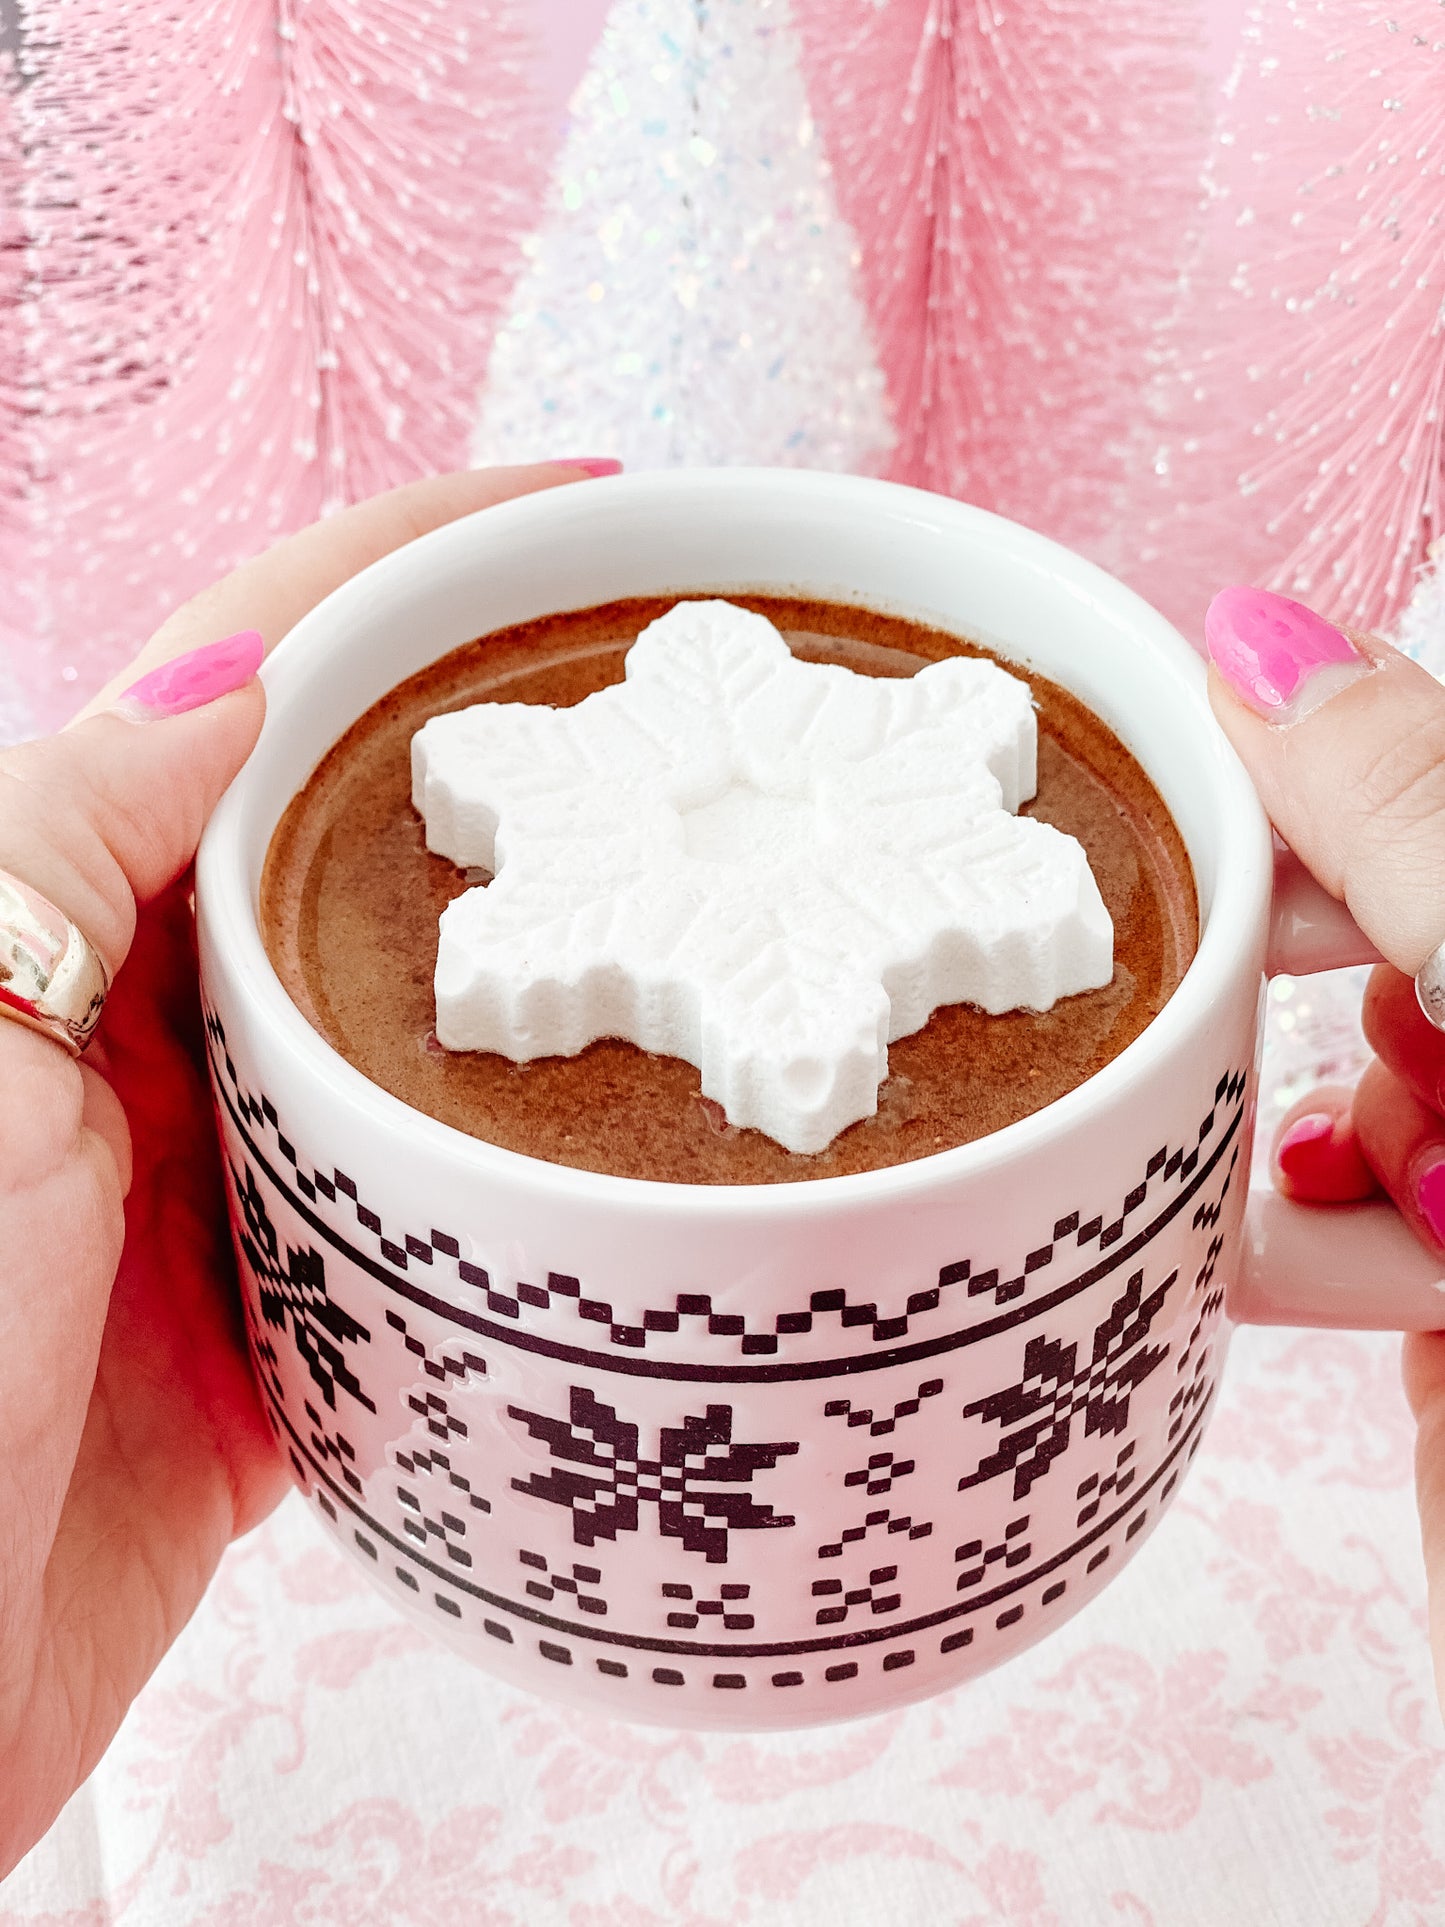 Fancy Hot Chocolate